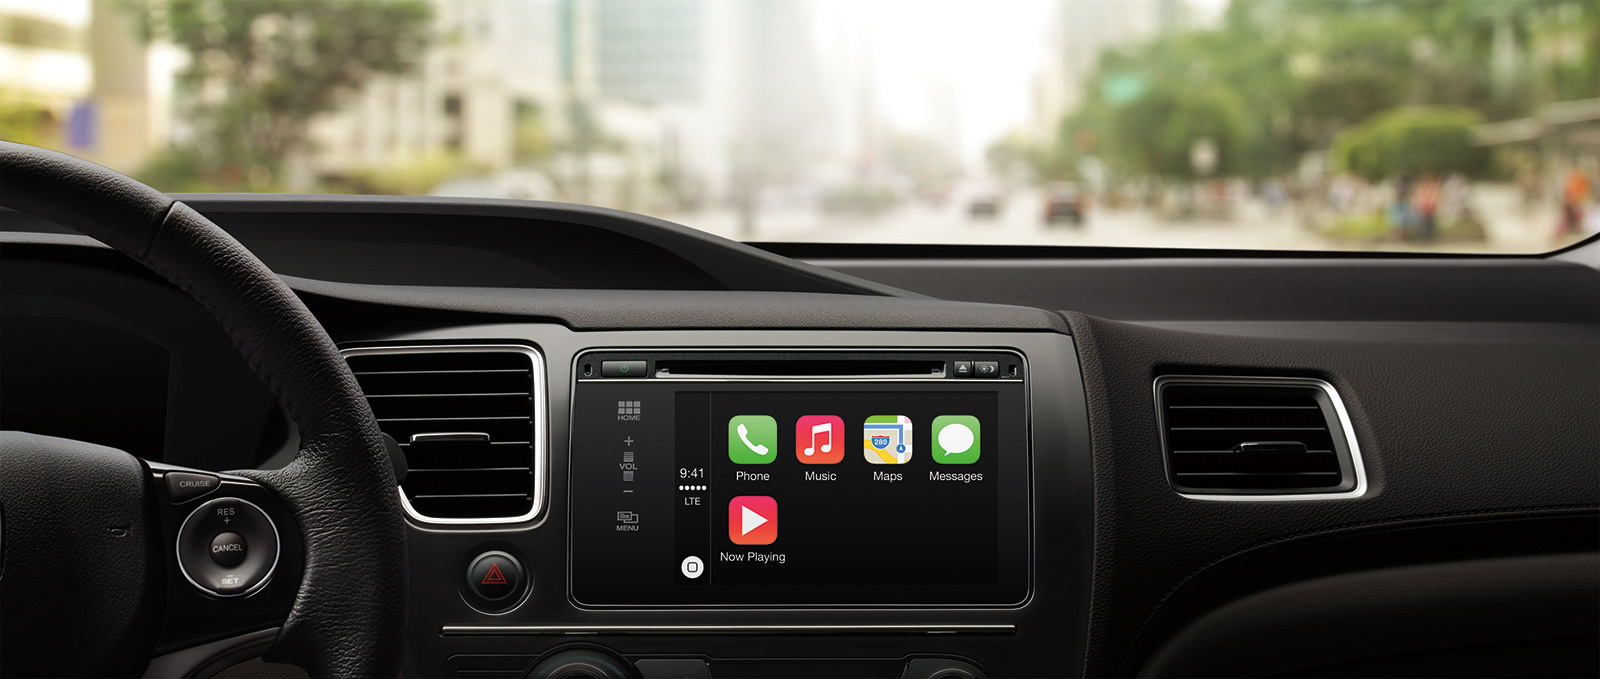 apple Car concept dashboard